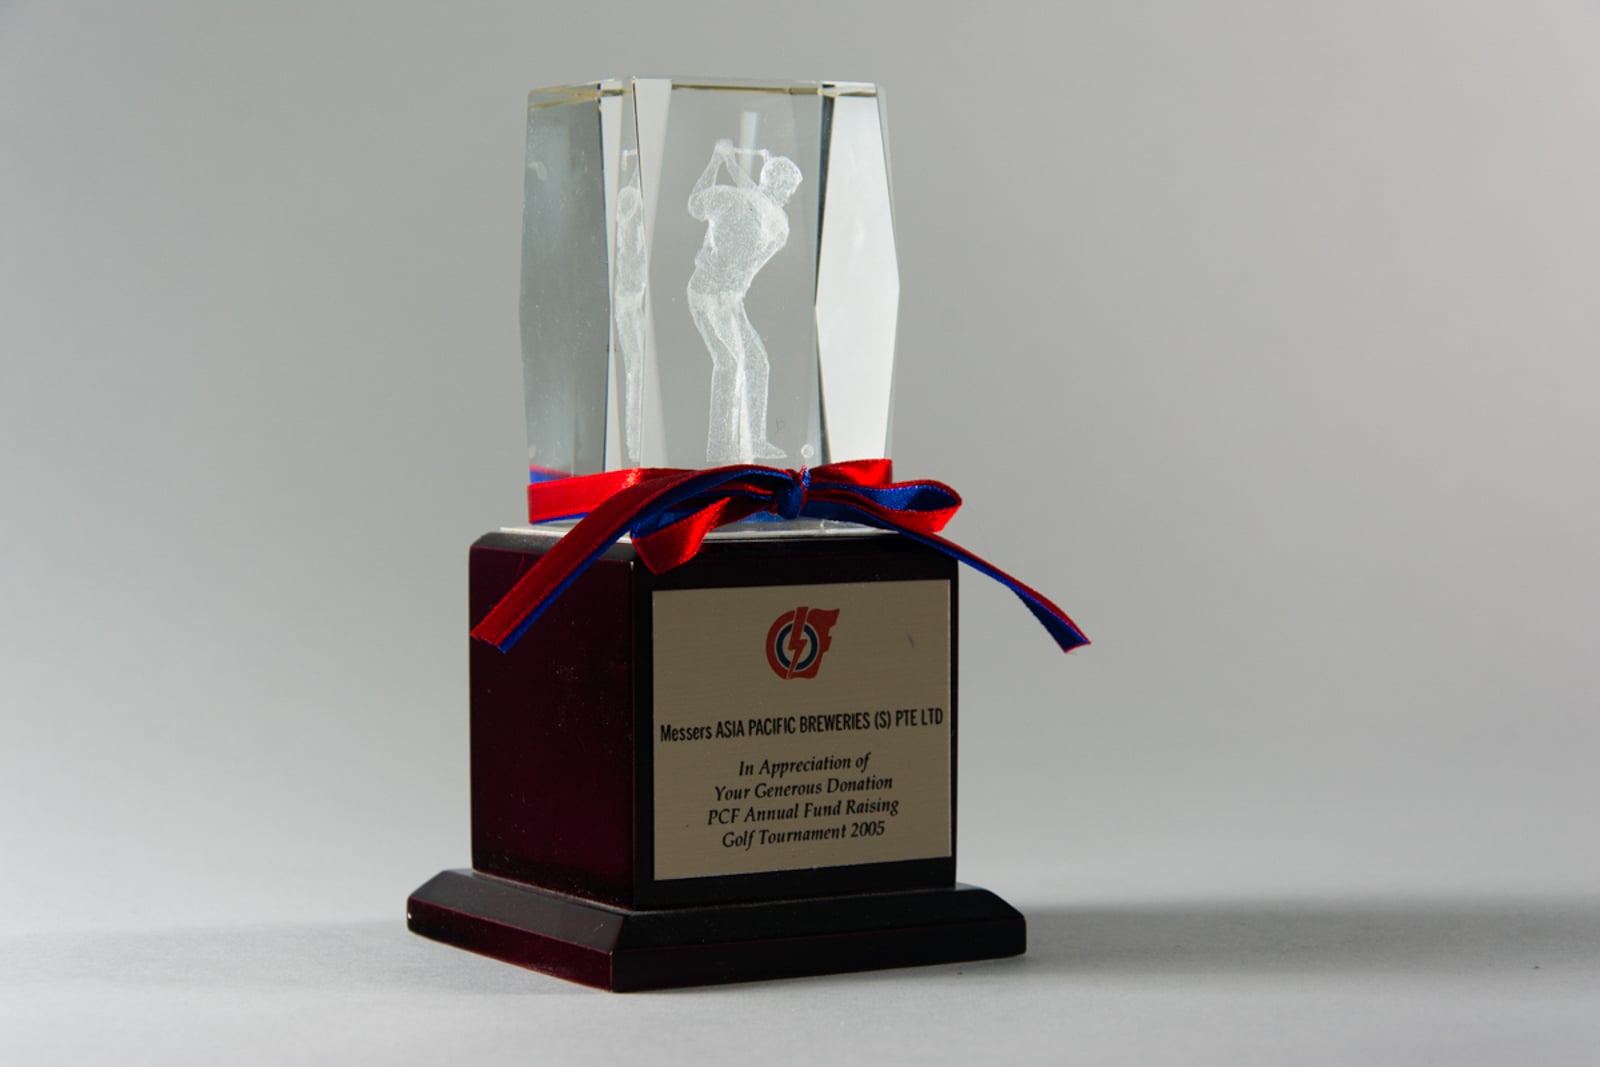 PCF Annual Fund Raising Golf Tournament Trophy 2005